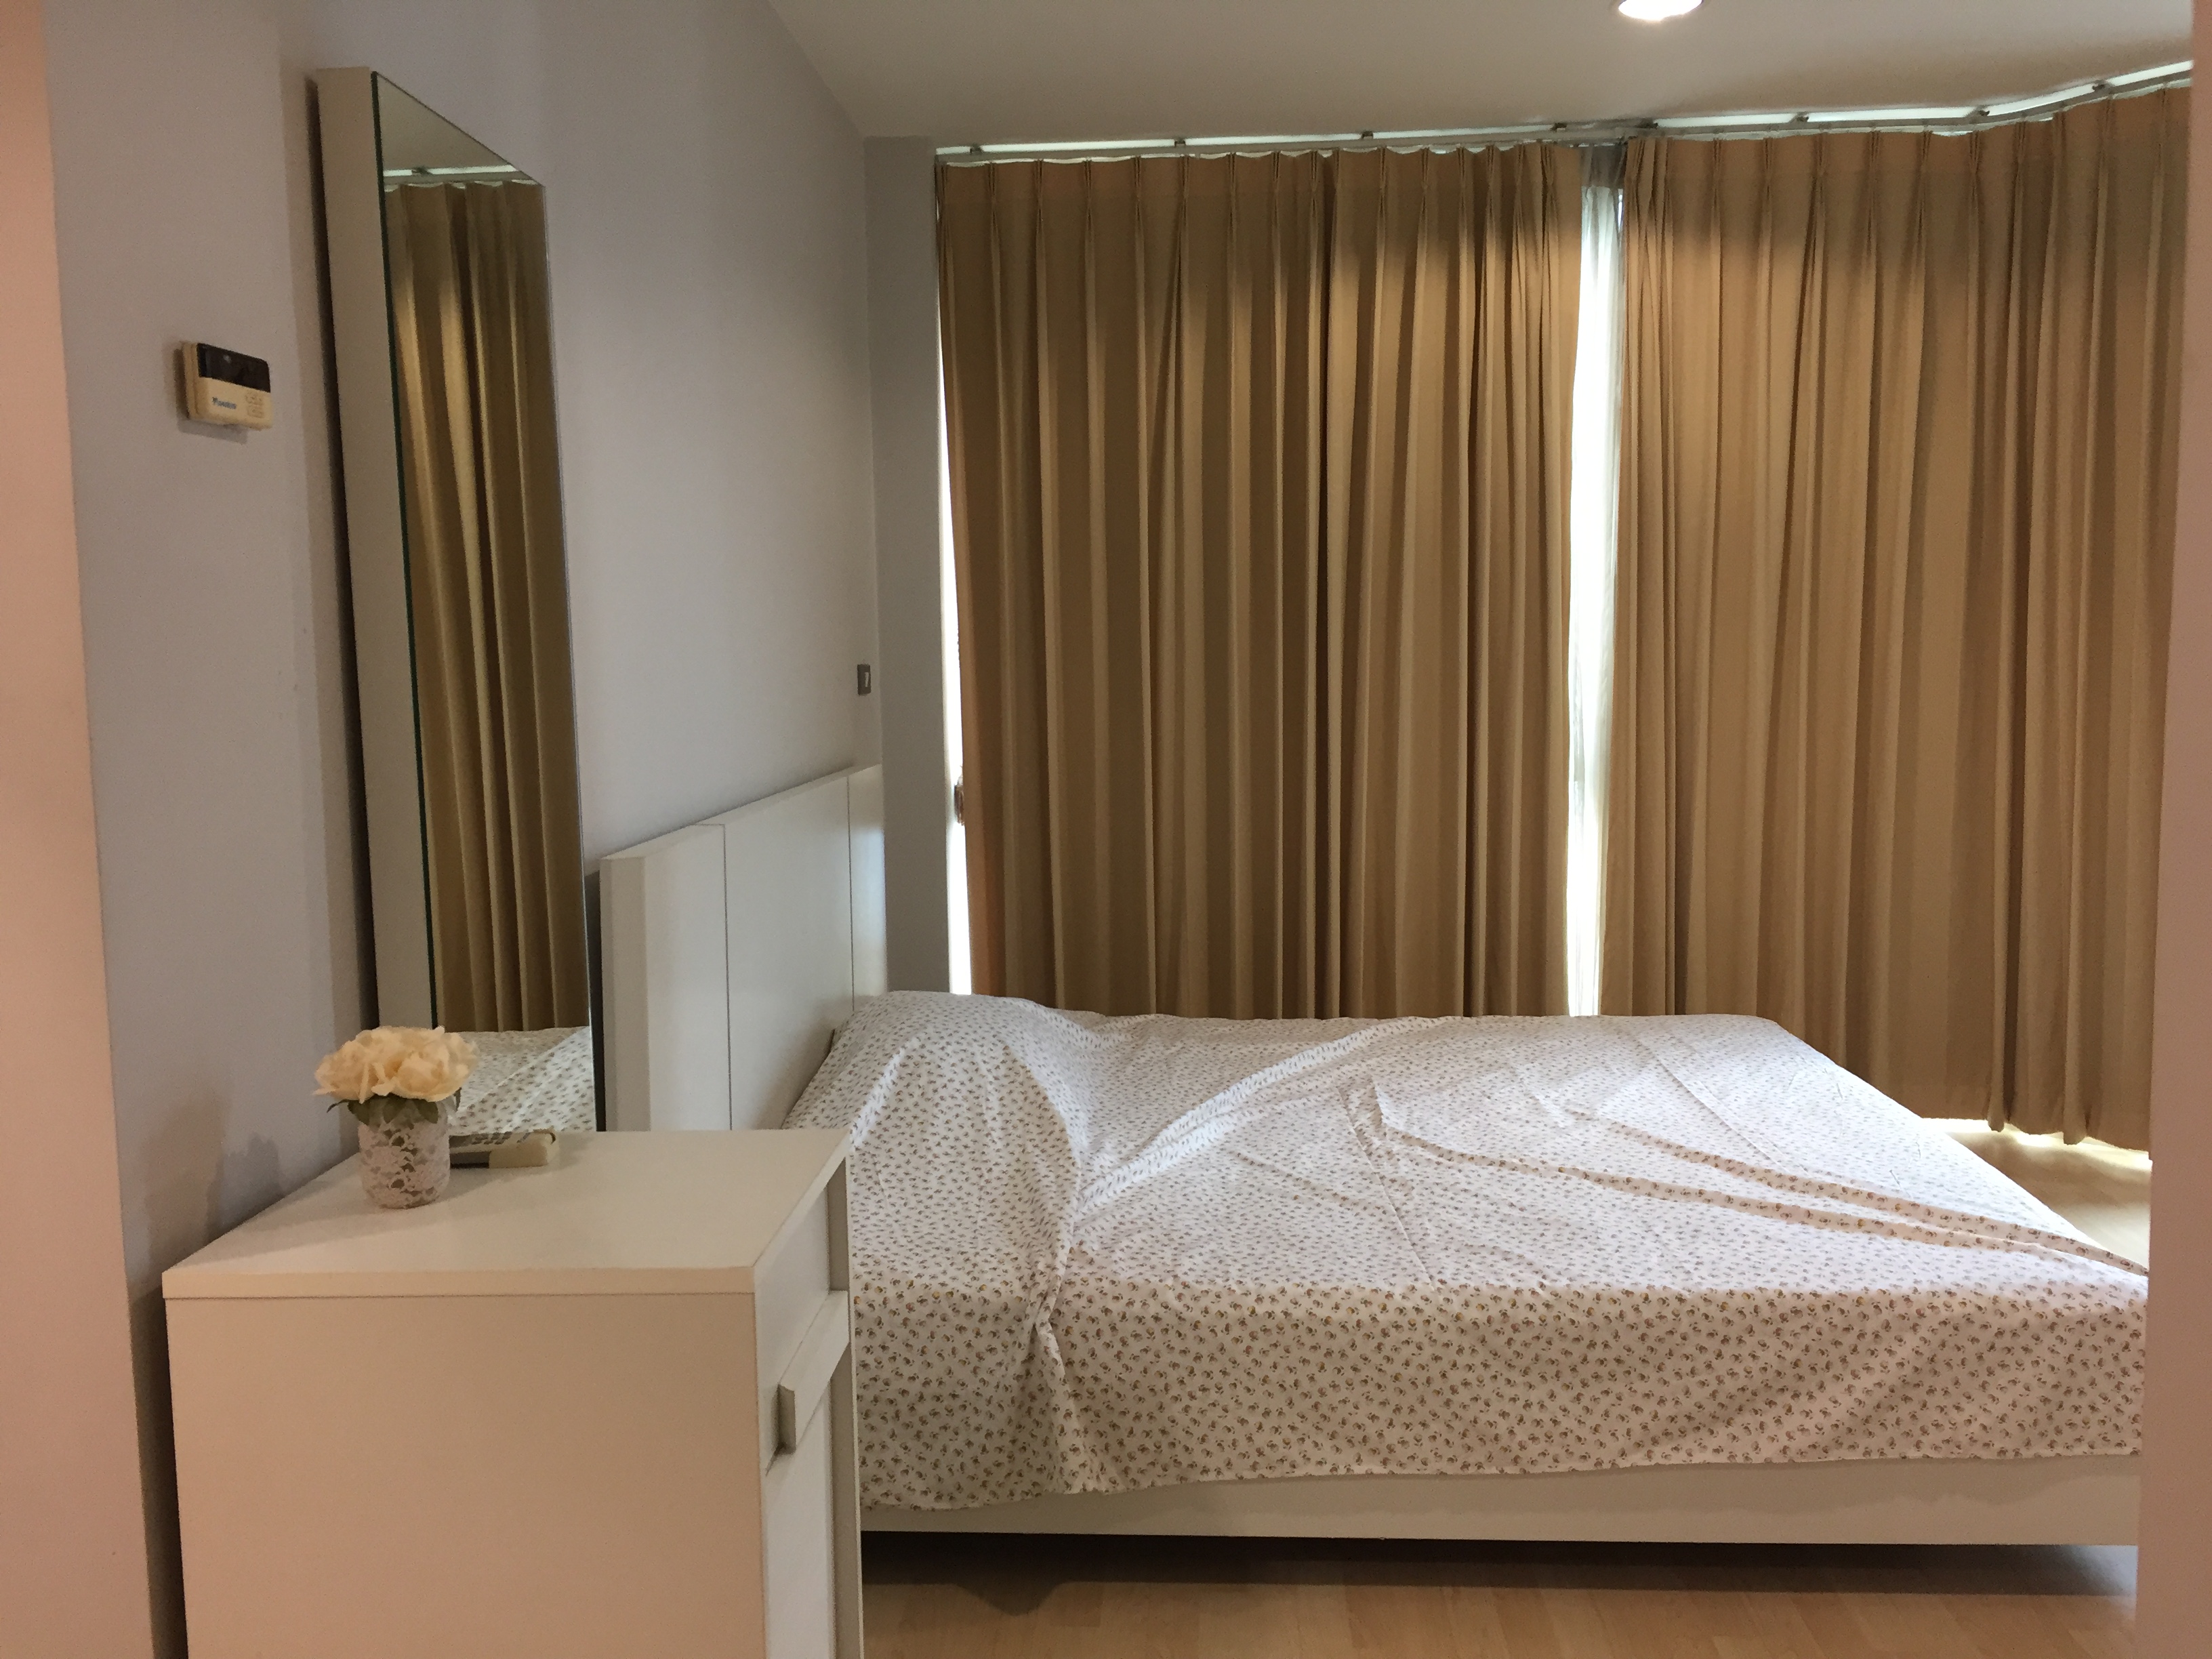 Sukhumvit 59 condo for rent, 2 beds 66.17 Sq.m. High Floor, Good view, Corner room,  walk to Thong lor BTS.